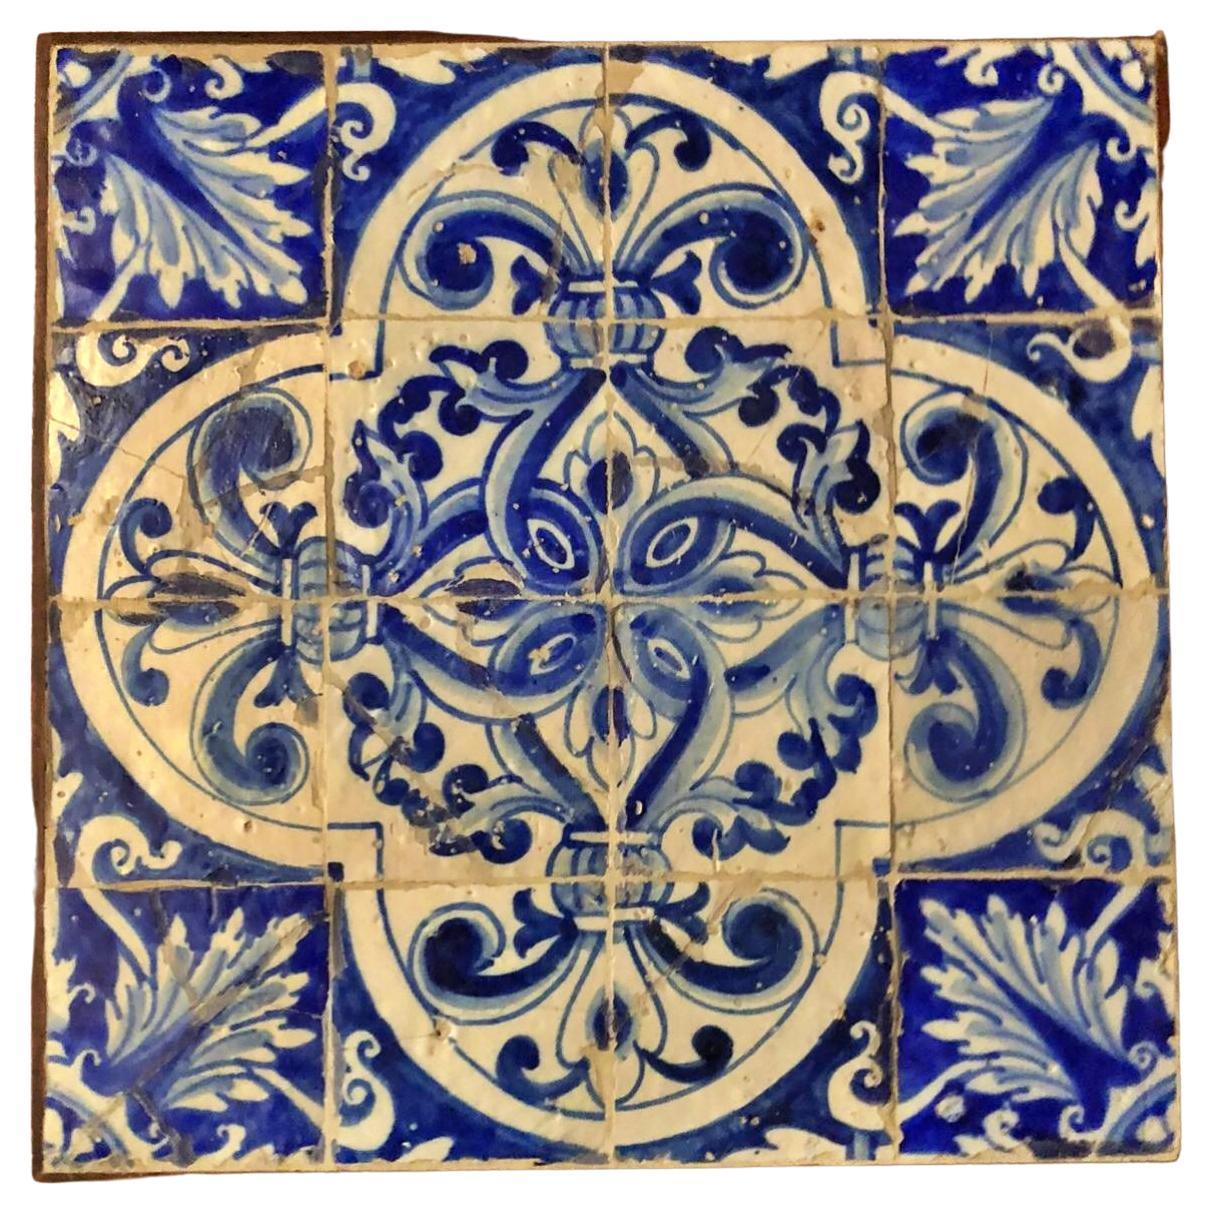 17th Century Portuguese Tile Panel